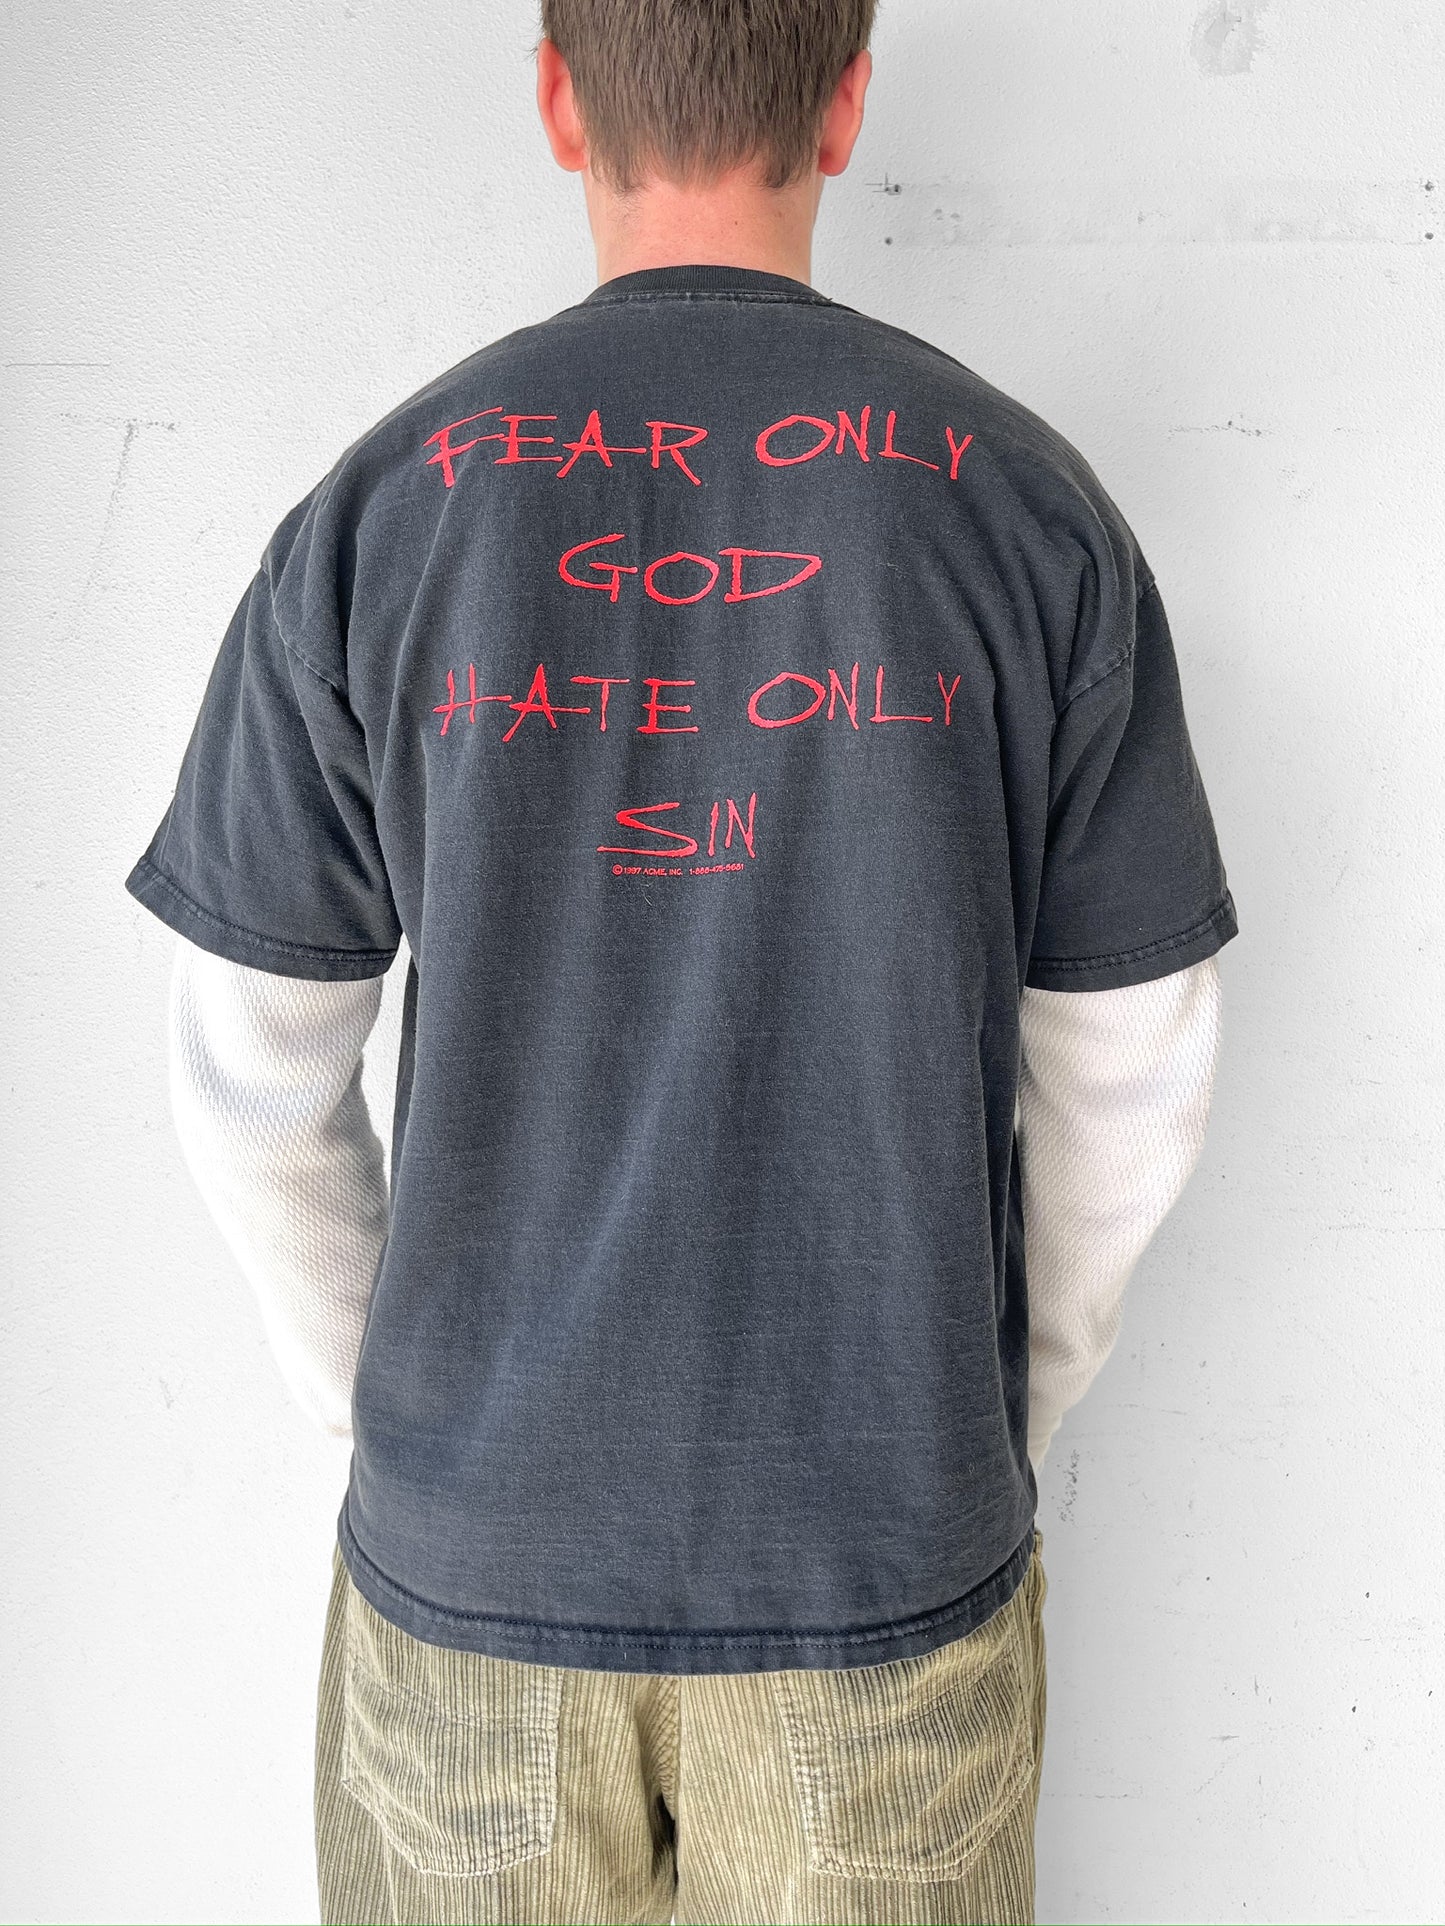 90’s Fear God, Hate Only Sin Script Shirt - XL